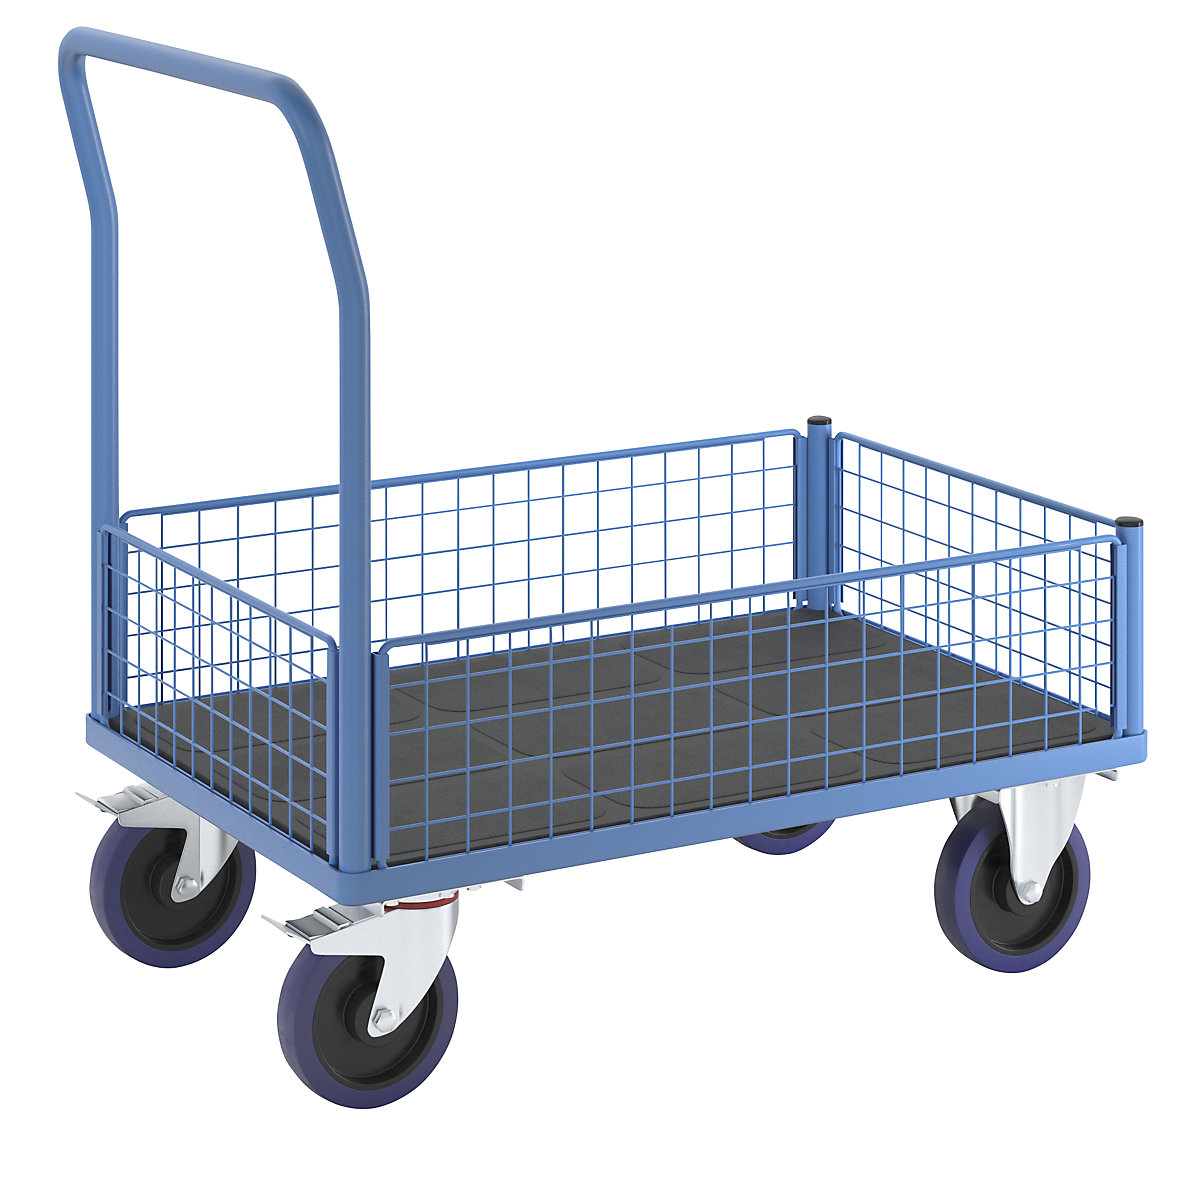 Plošinový vozík s mřížkami v poloviční výšce - eurokraft pro